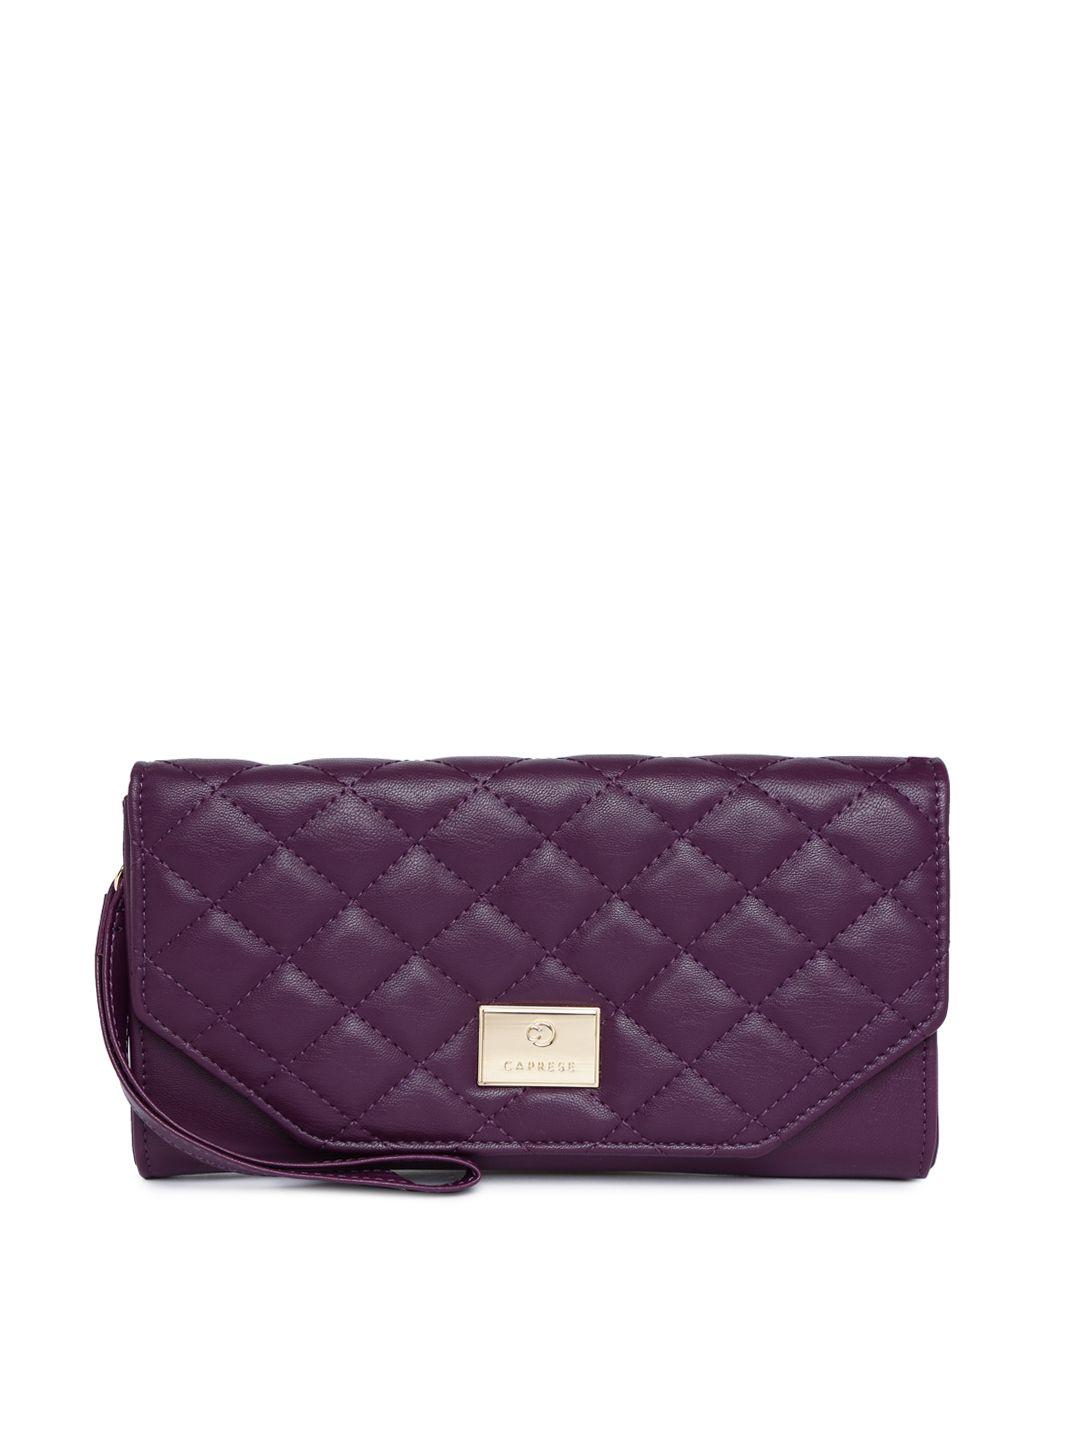 caprese women purple clutch sling bag